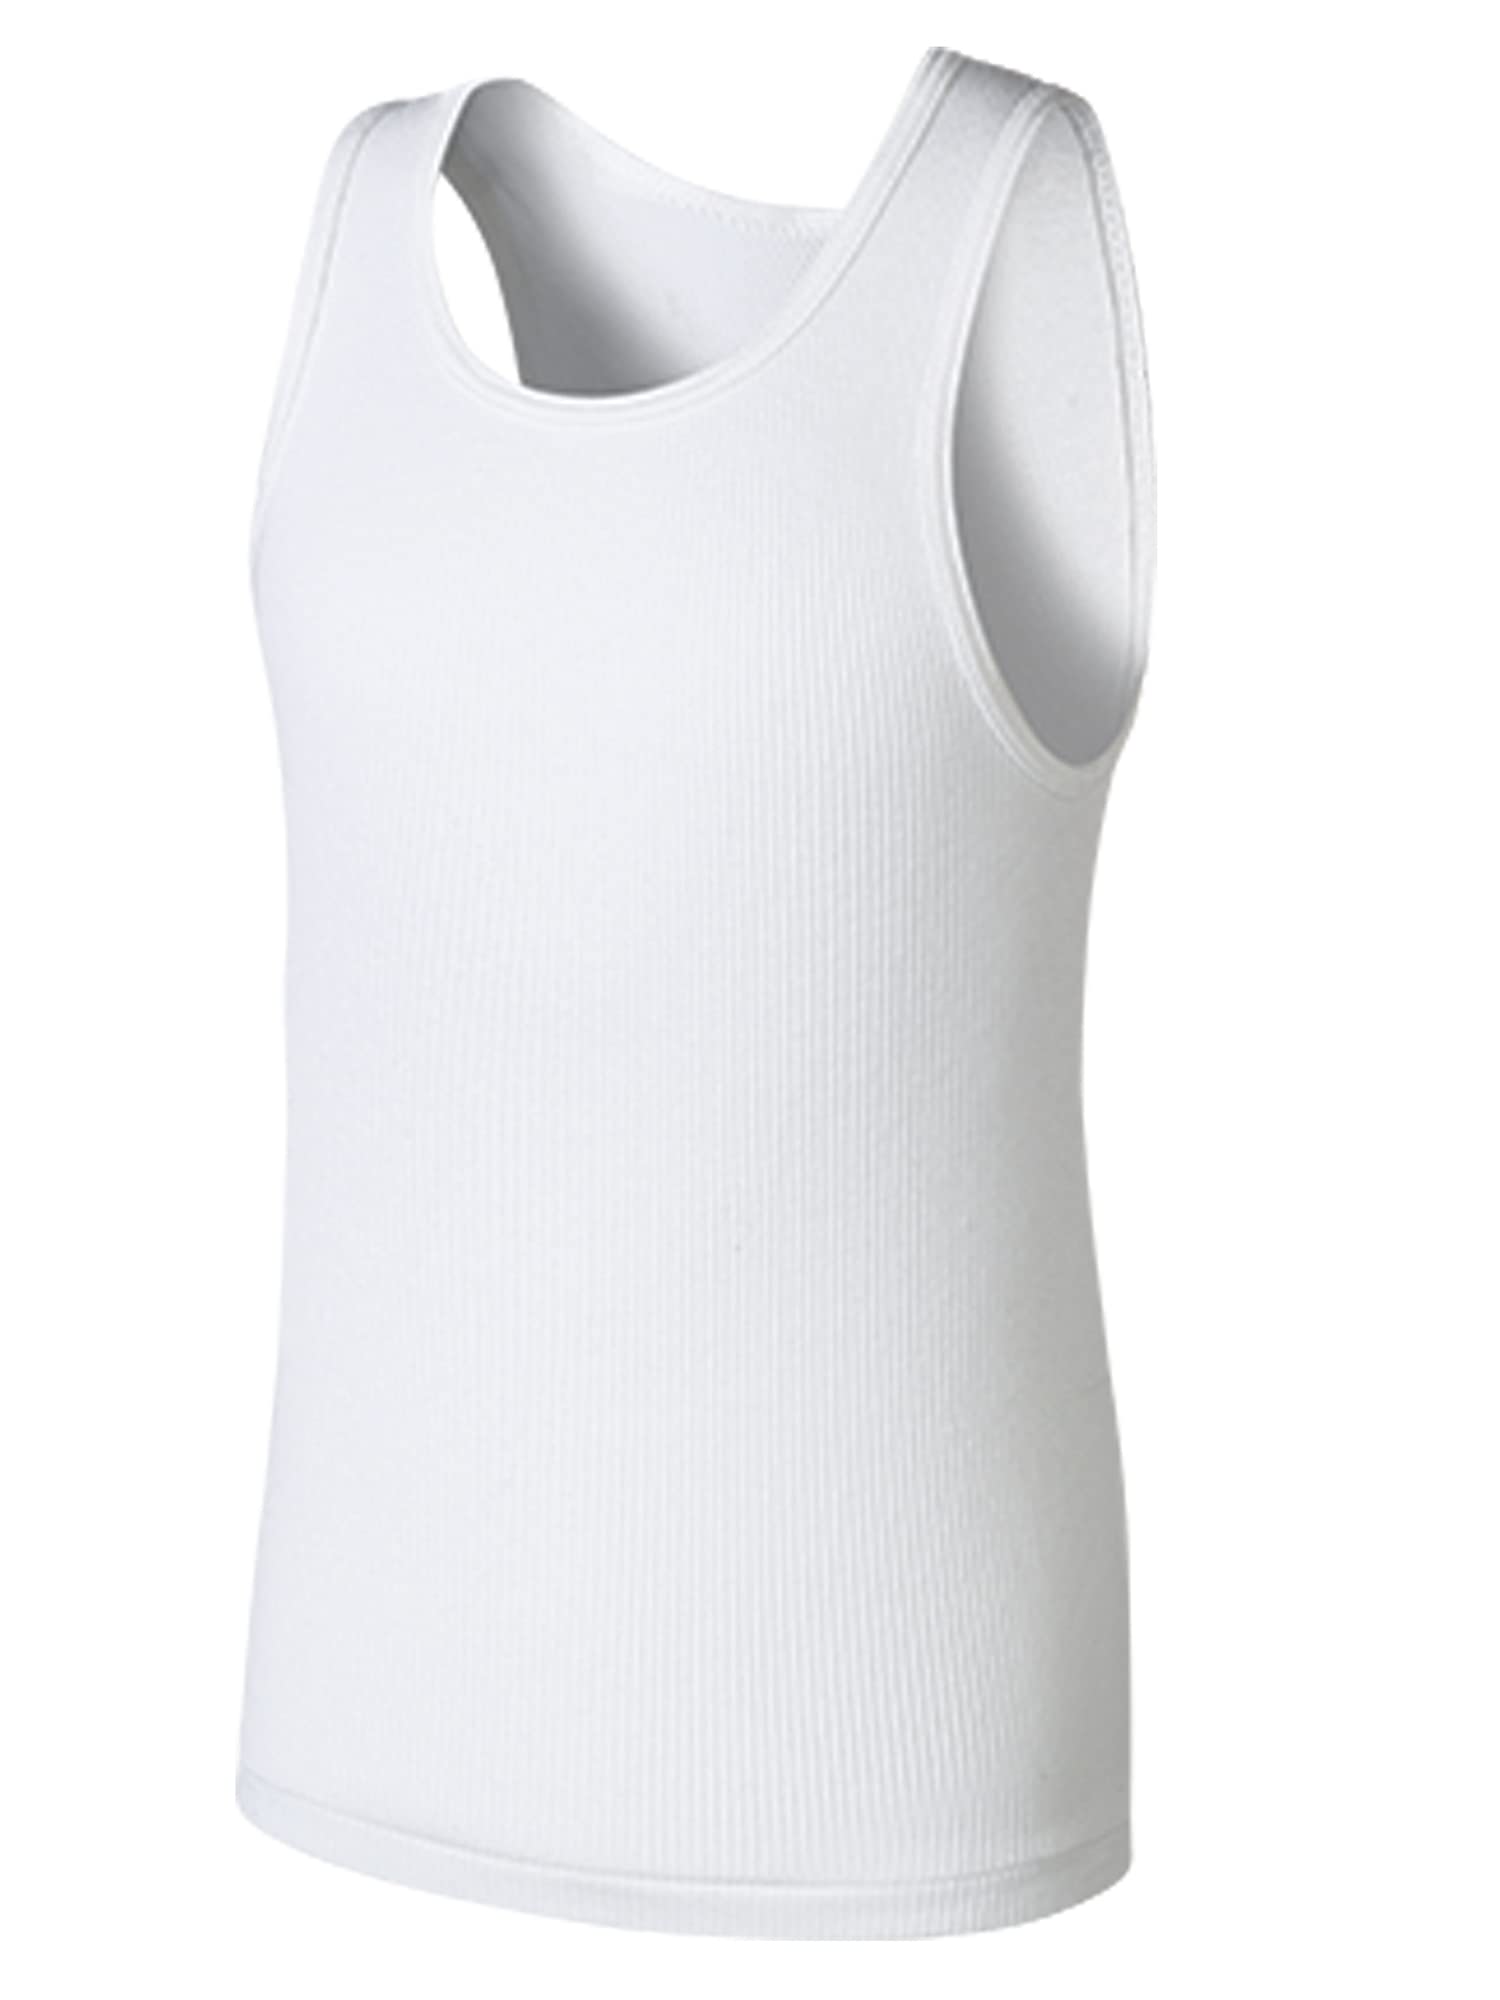 Hanes Boys' Tank Undershirt, EcoSmart Cotton Shirt, Multiple Packs Available